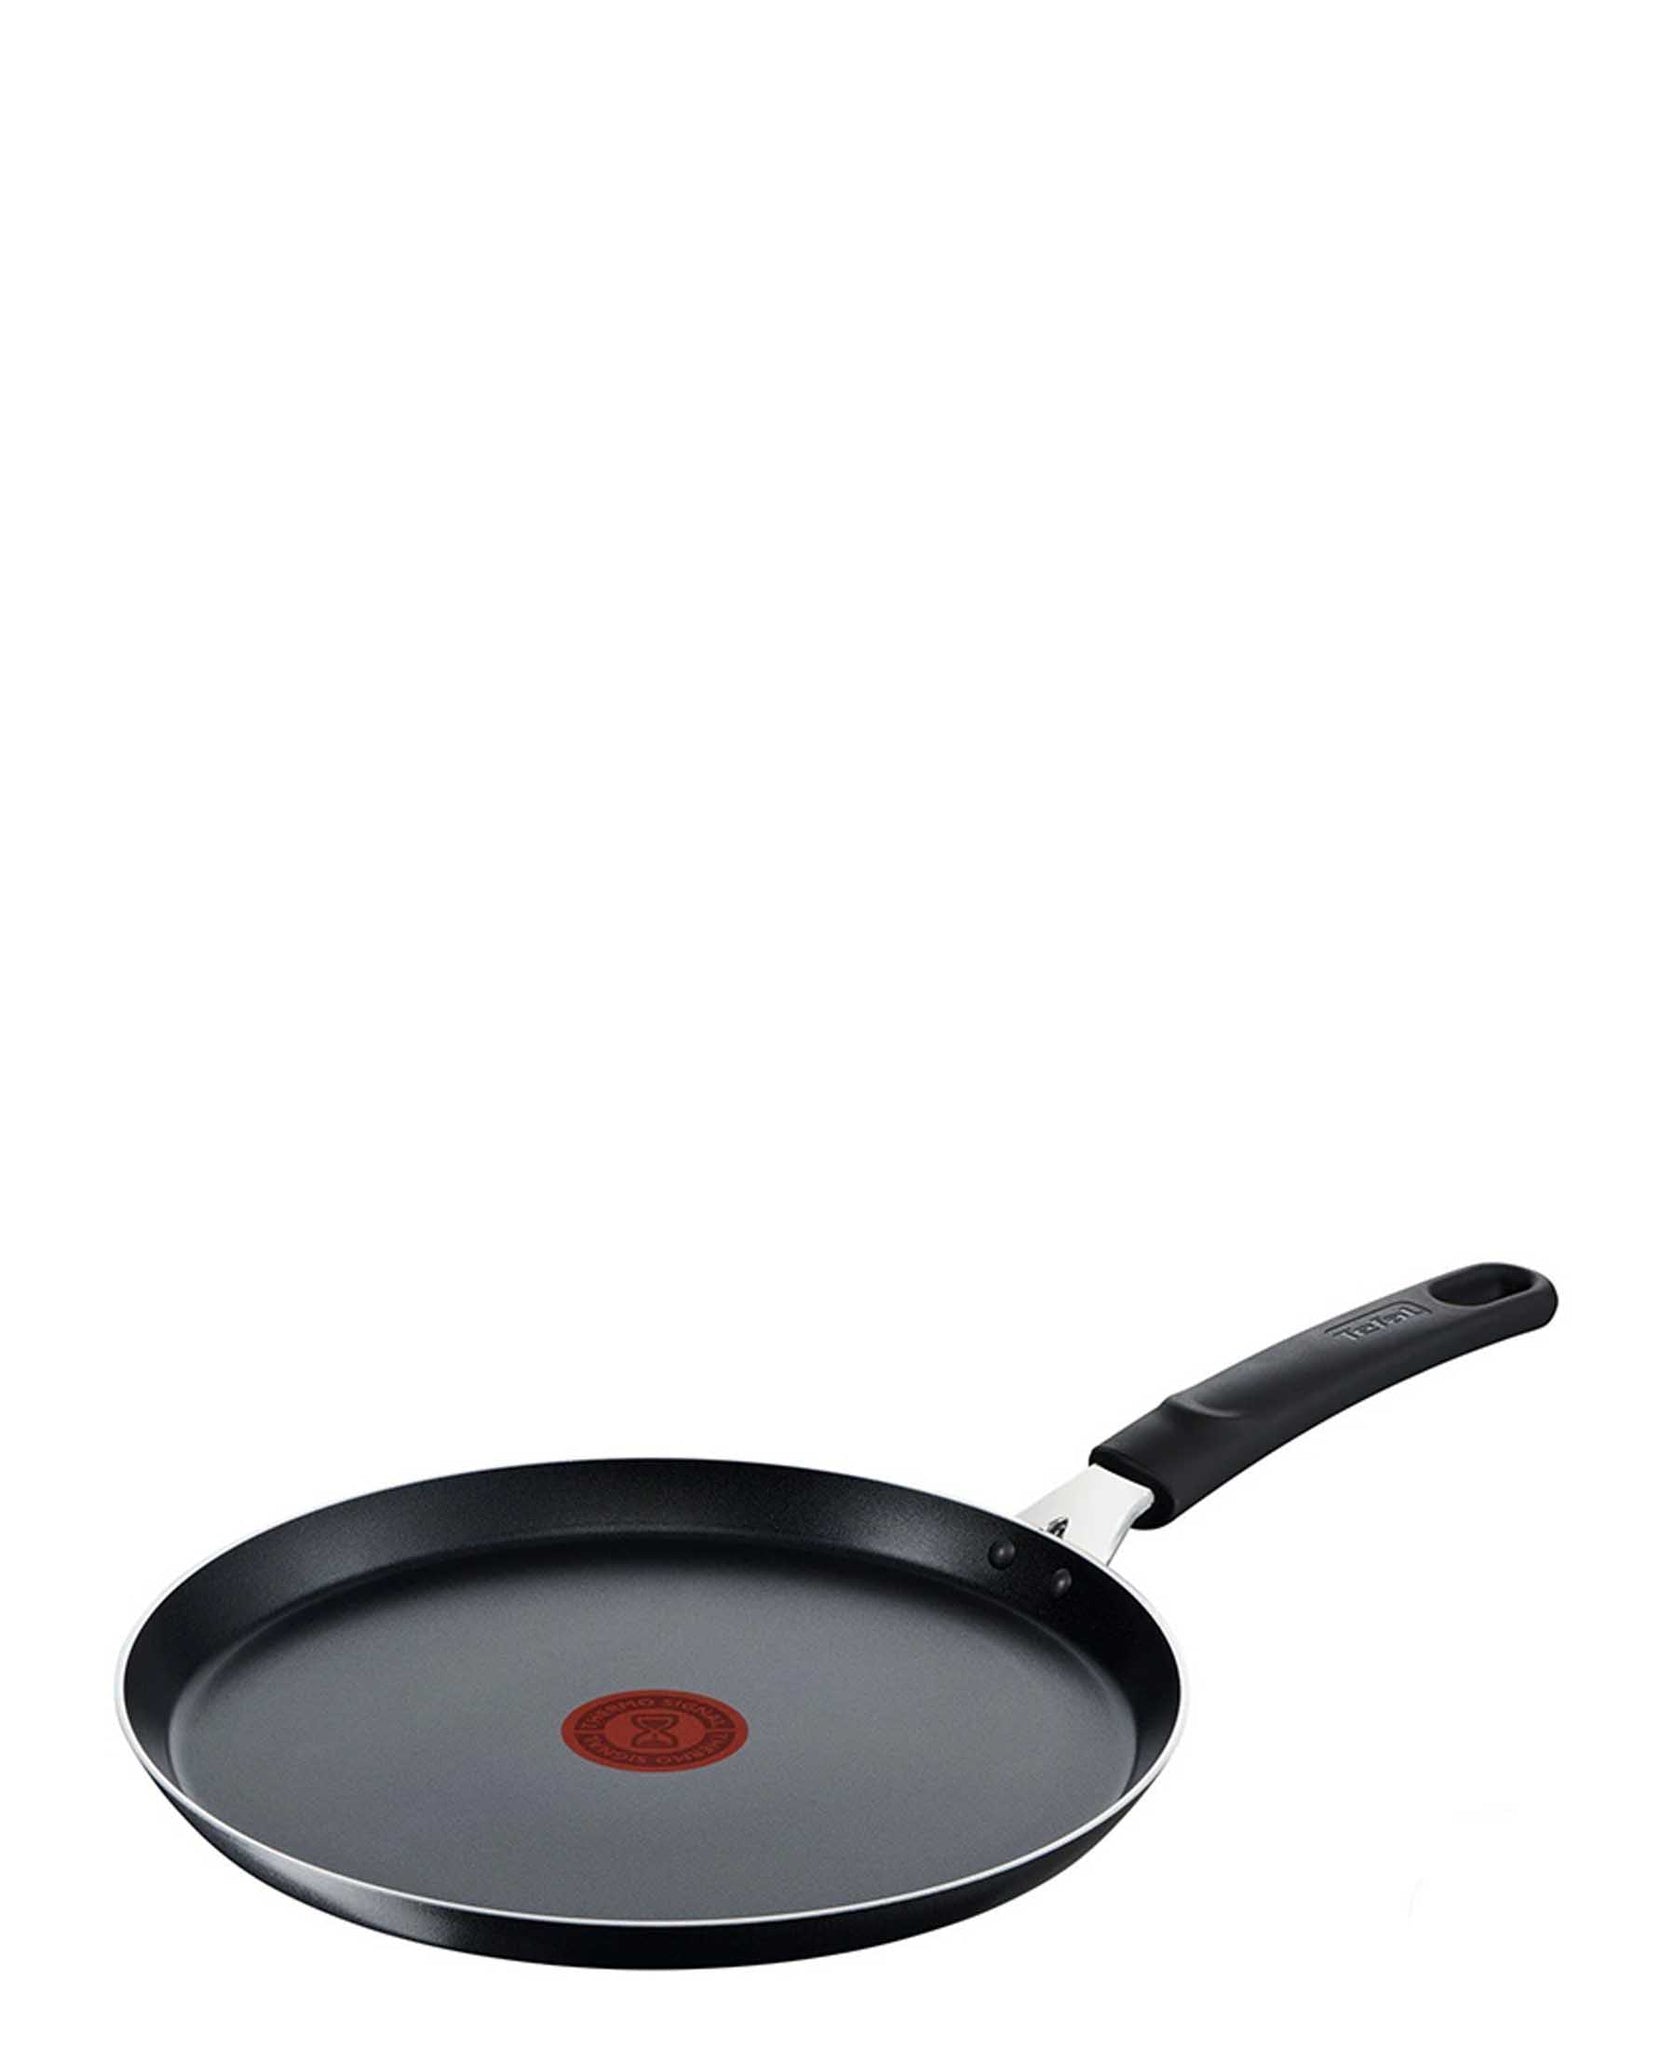 Tefal Simplicity 25cm Pancake Pan - Black